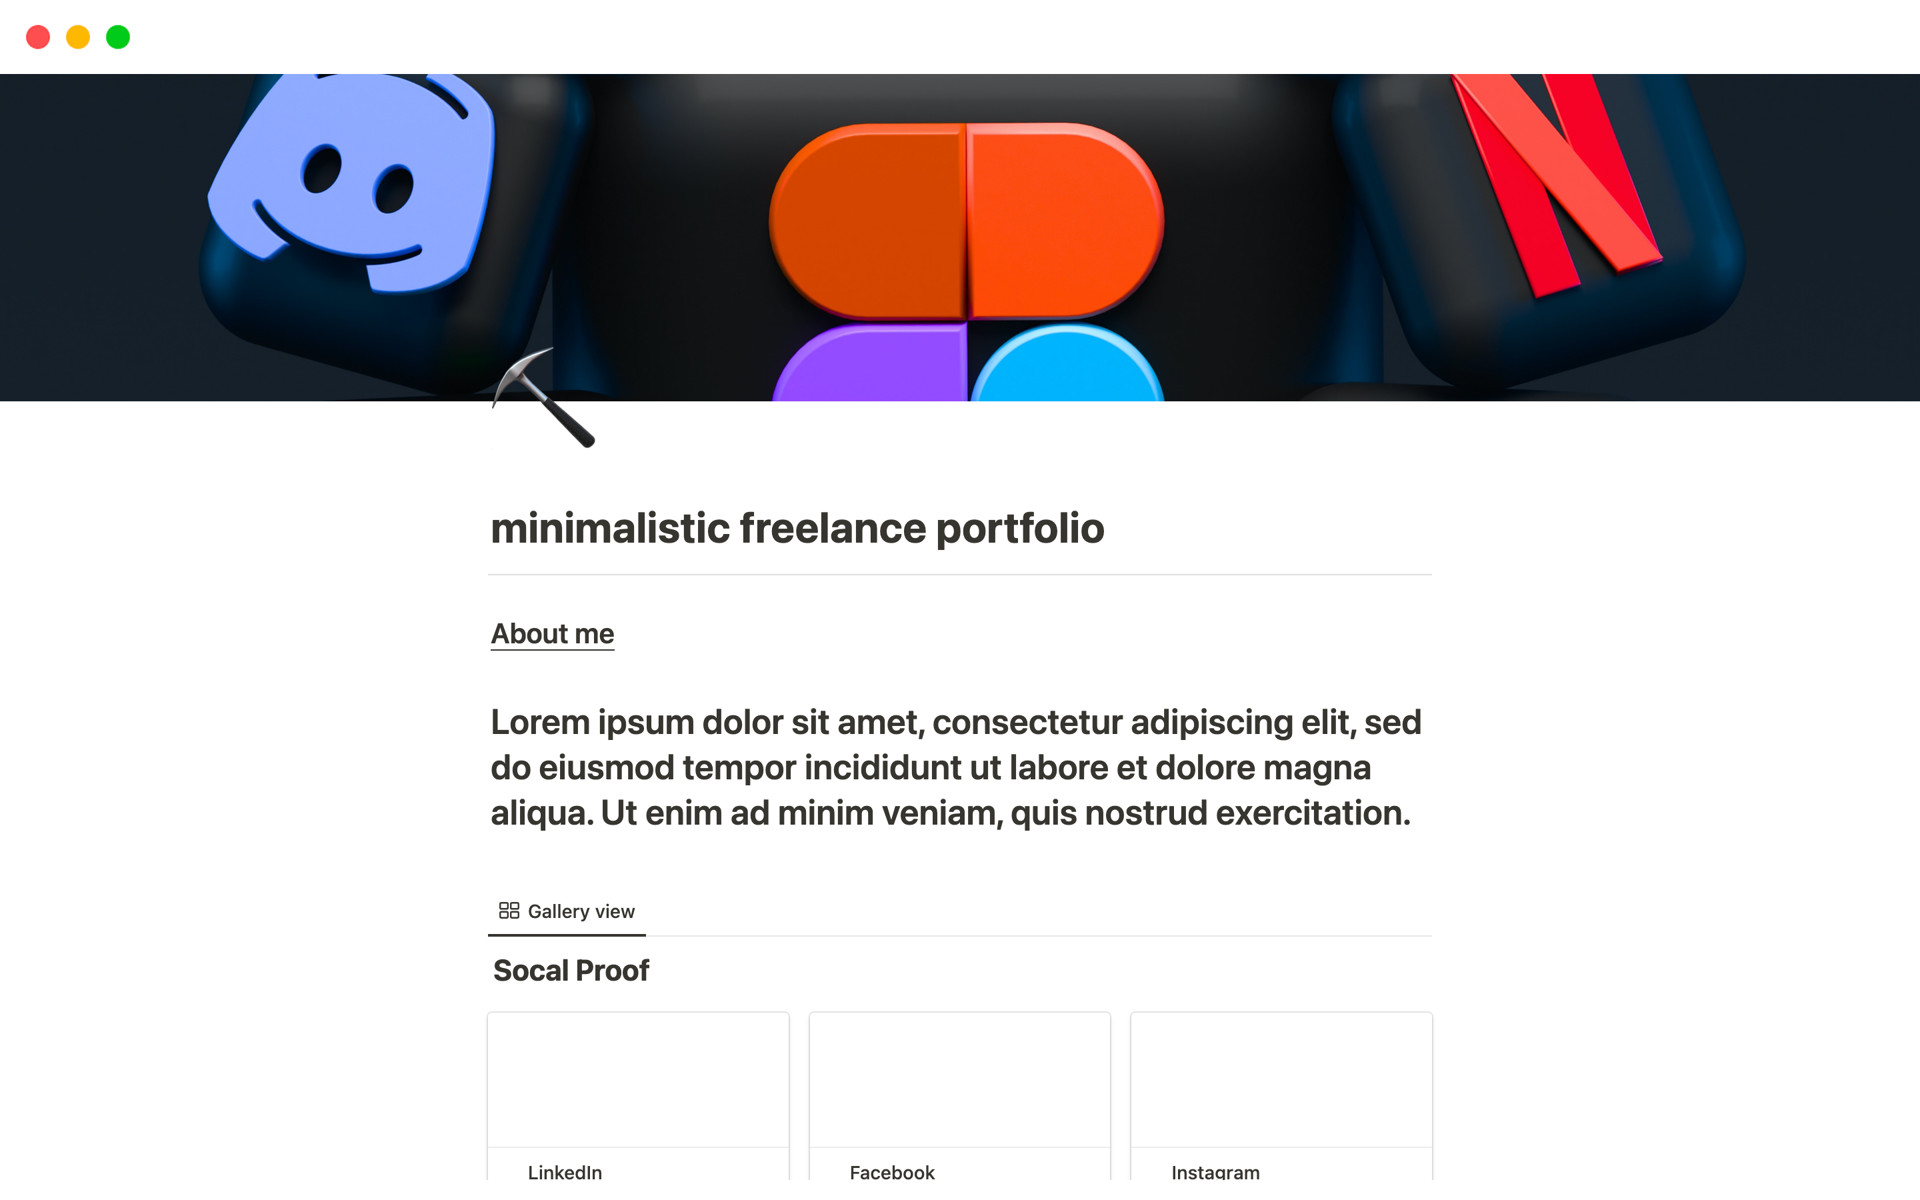 Aperçu du modèle de minimalistic freelance portfolio